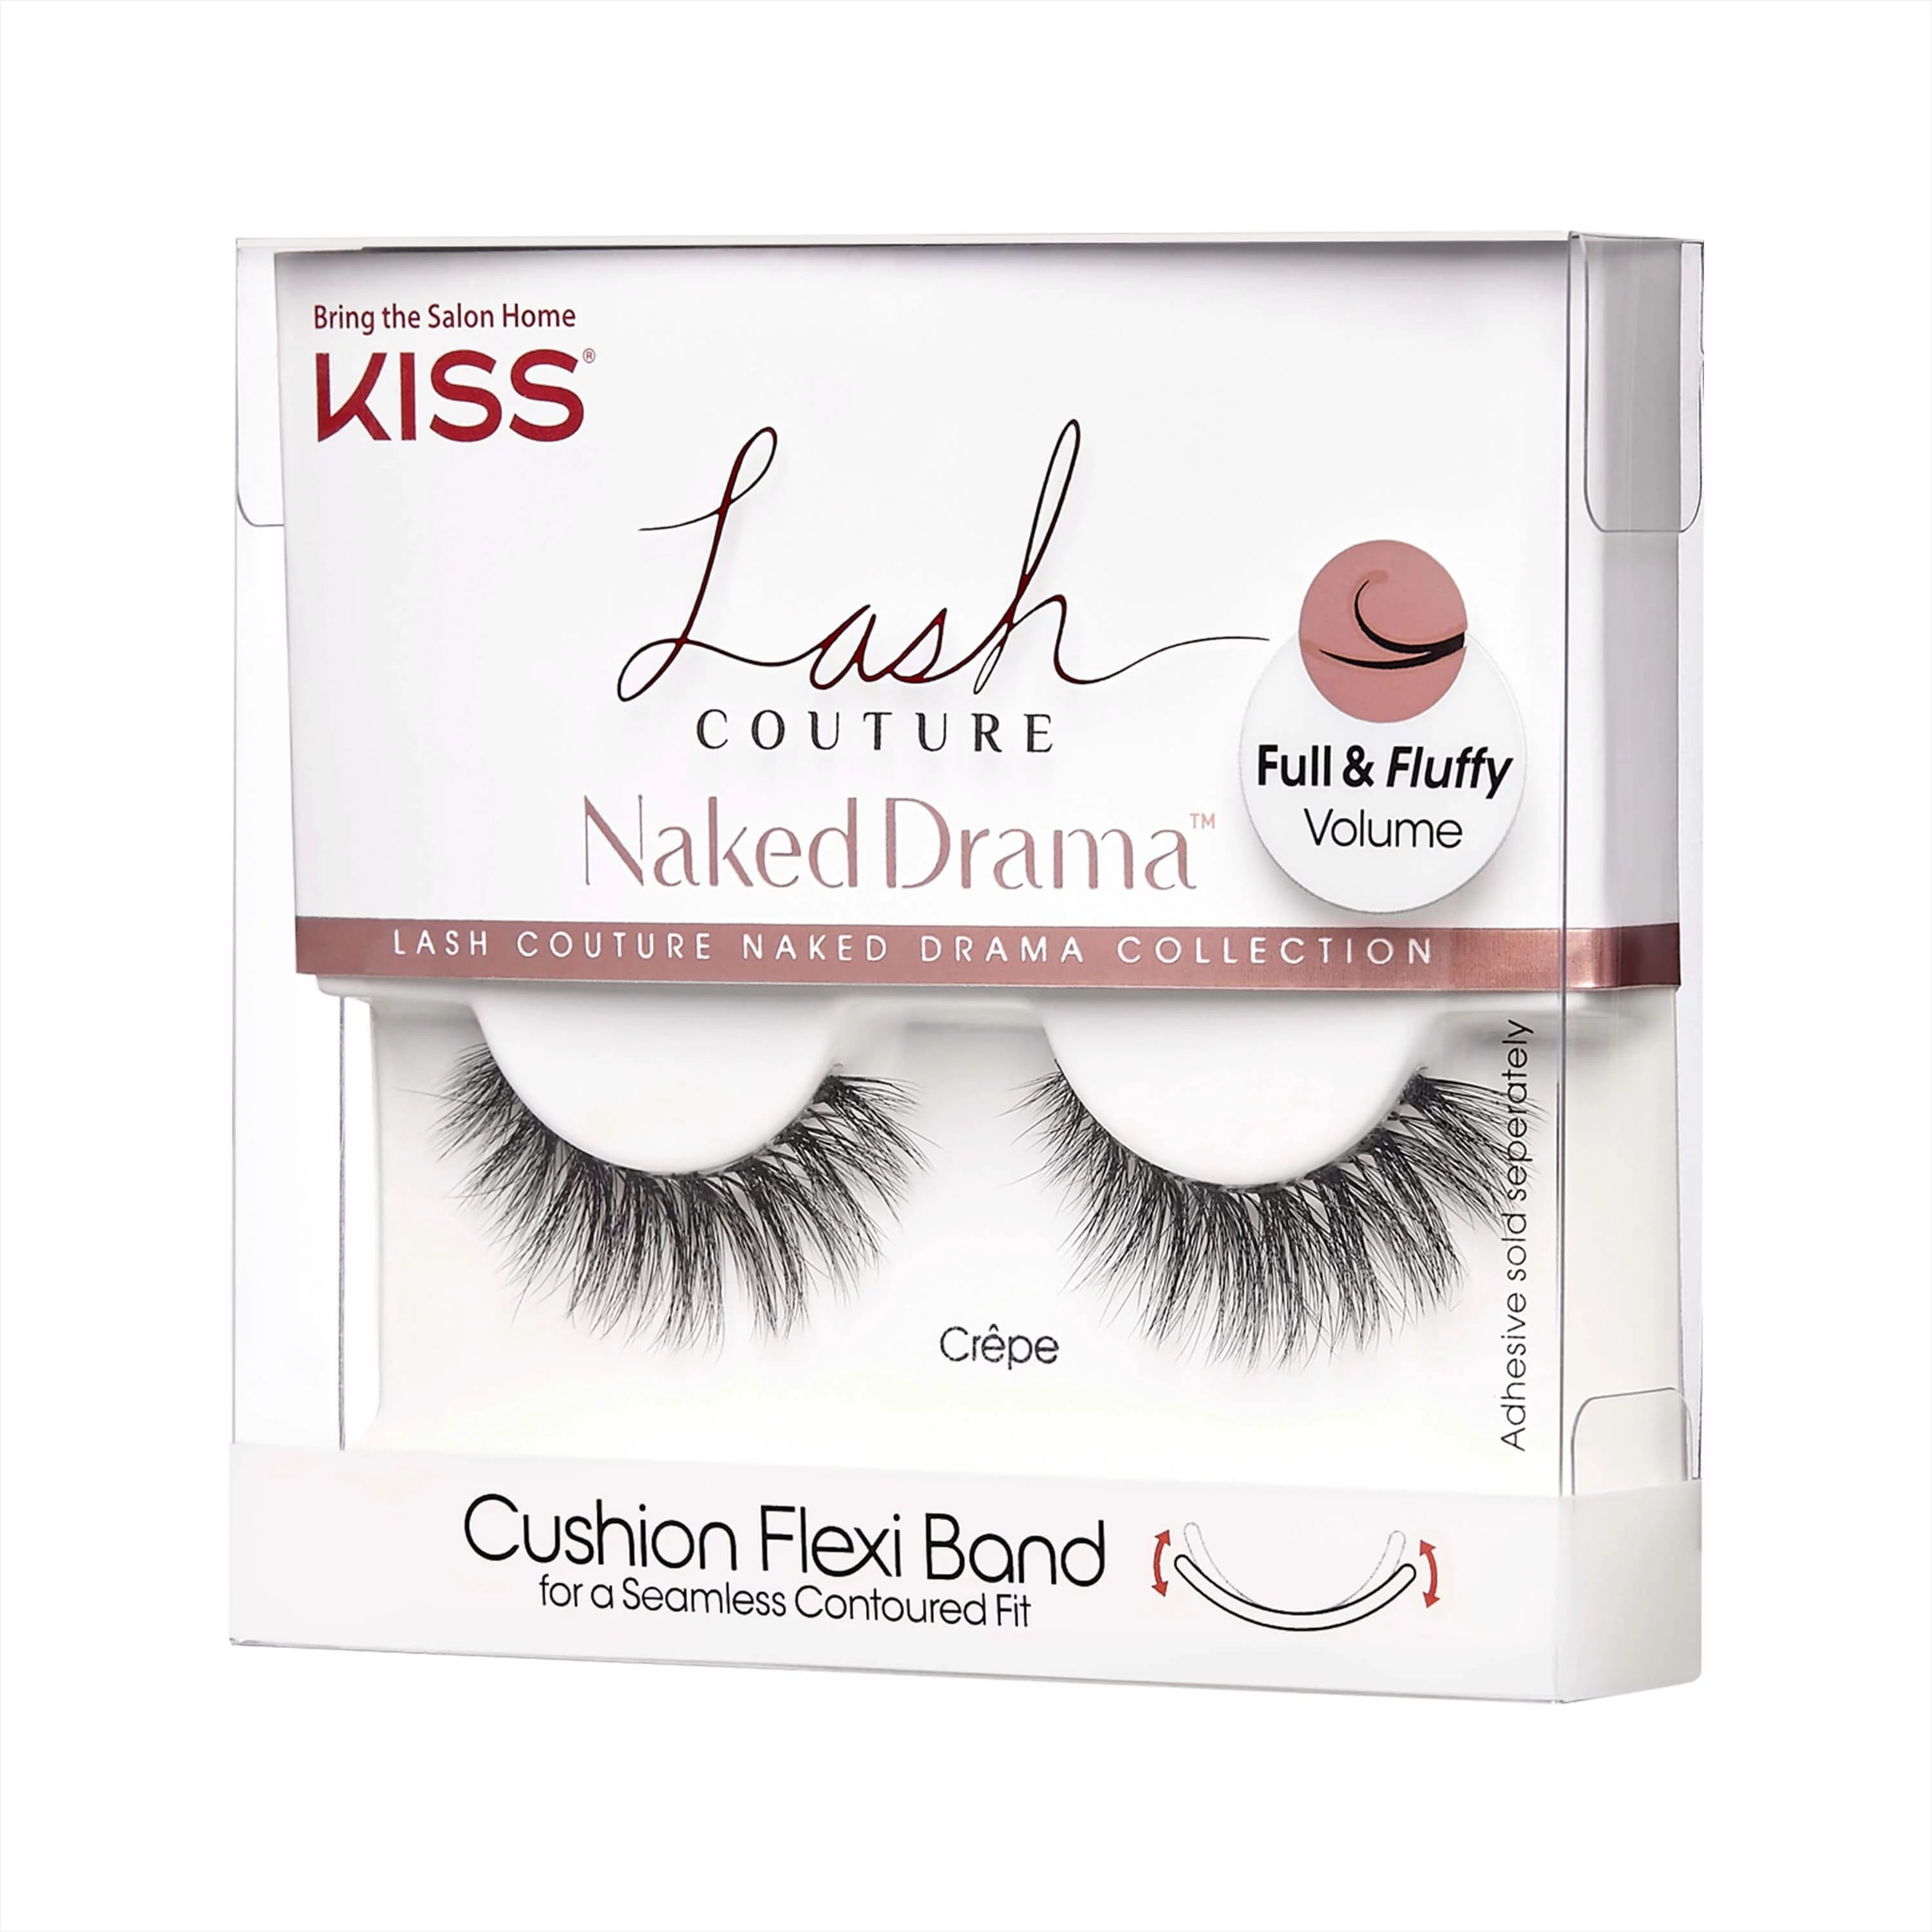 KISS Lash Couture Naked Drama False Eyelashes, ‘Crepe’, 1 Pair | Walmart (US)